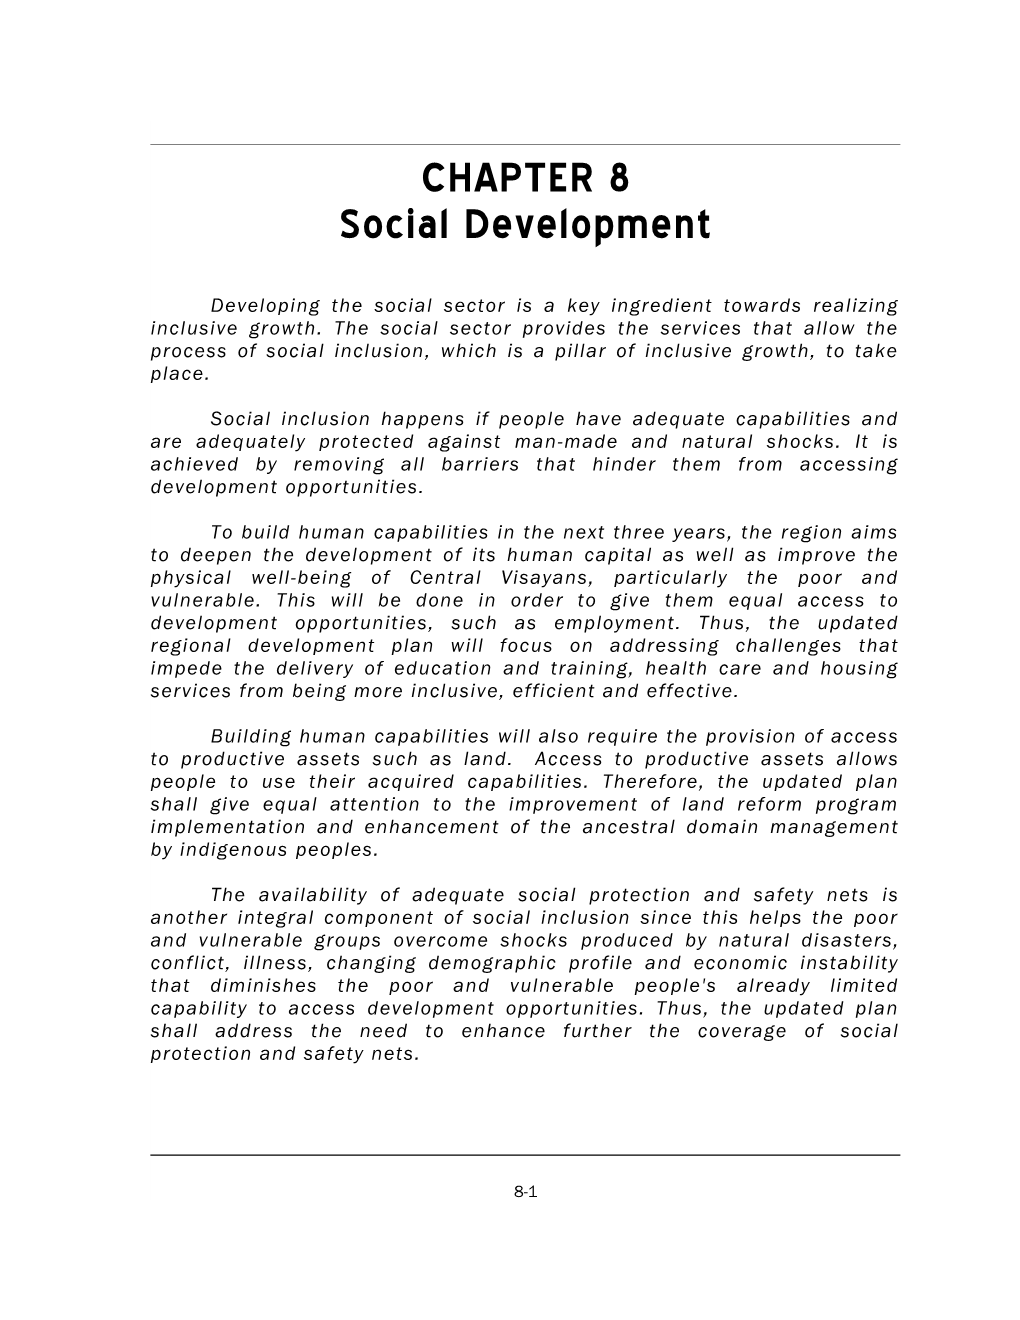 Chapter 8: Social Development